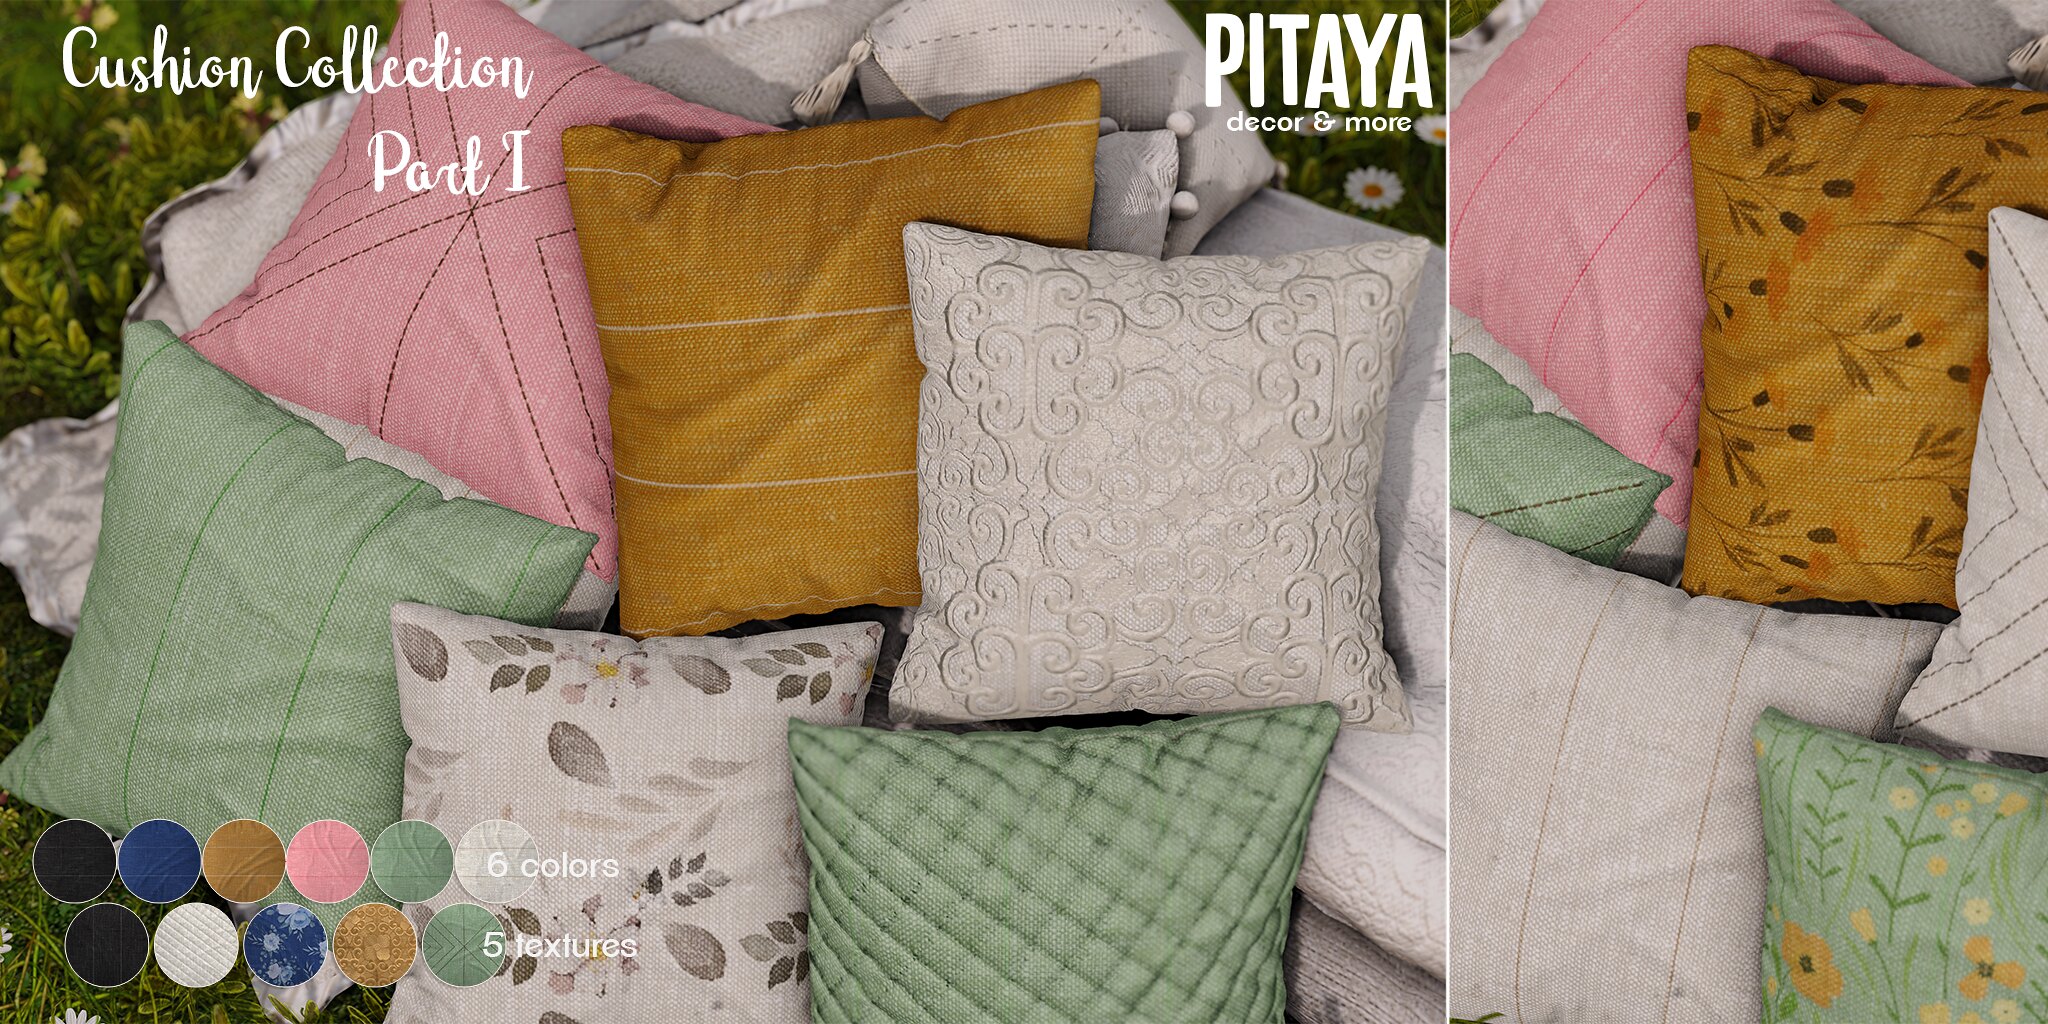 Pitaya – Cushion Collection Part 1